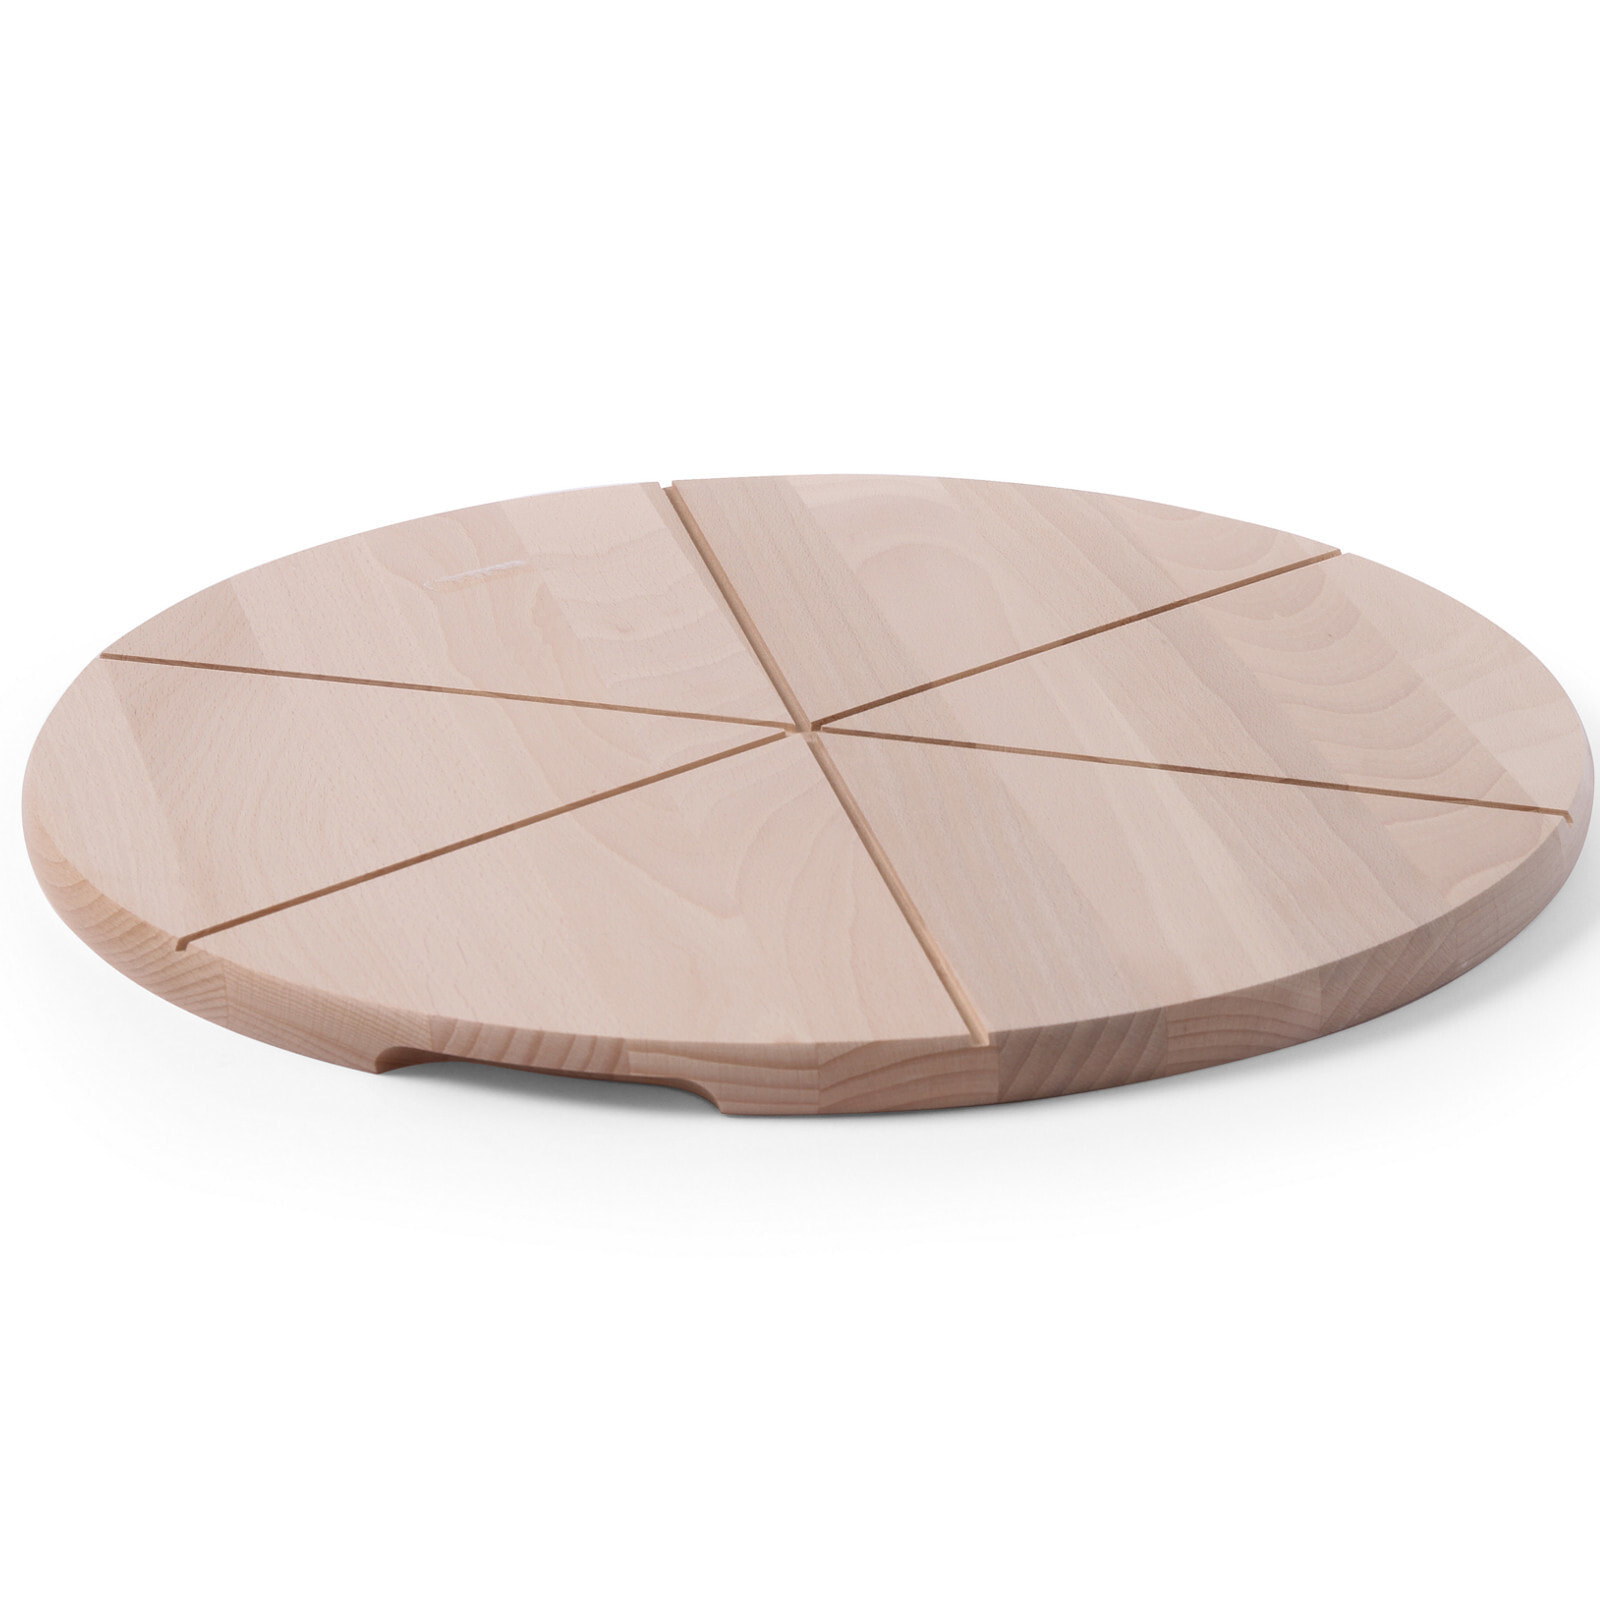 Wooden pizza cutting board 35cm - Hendi 505557